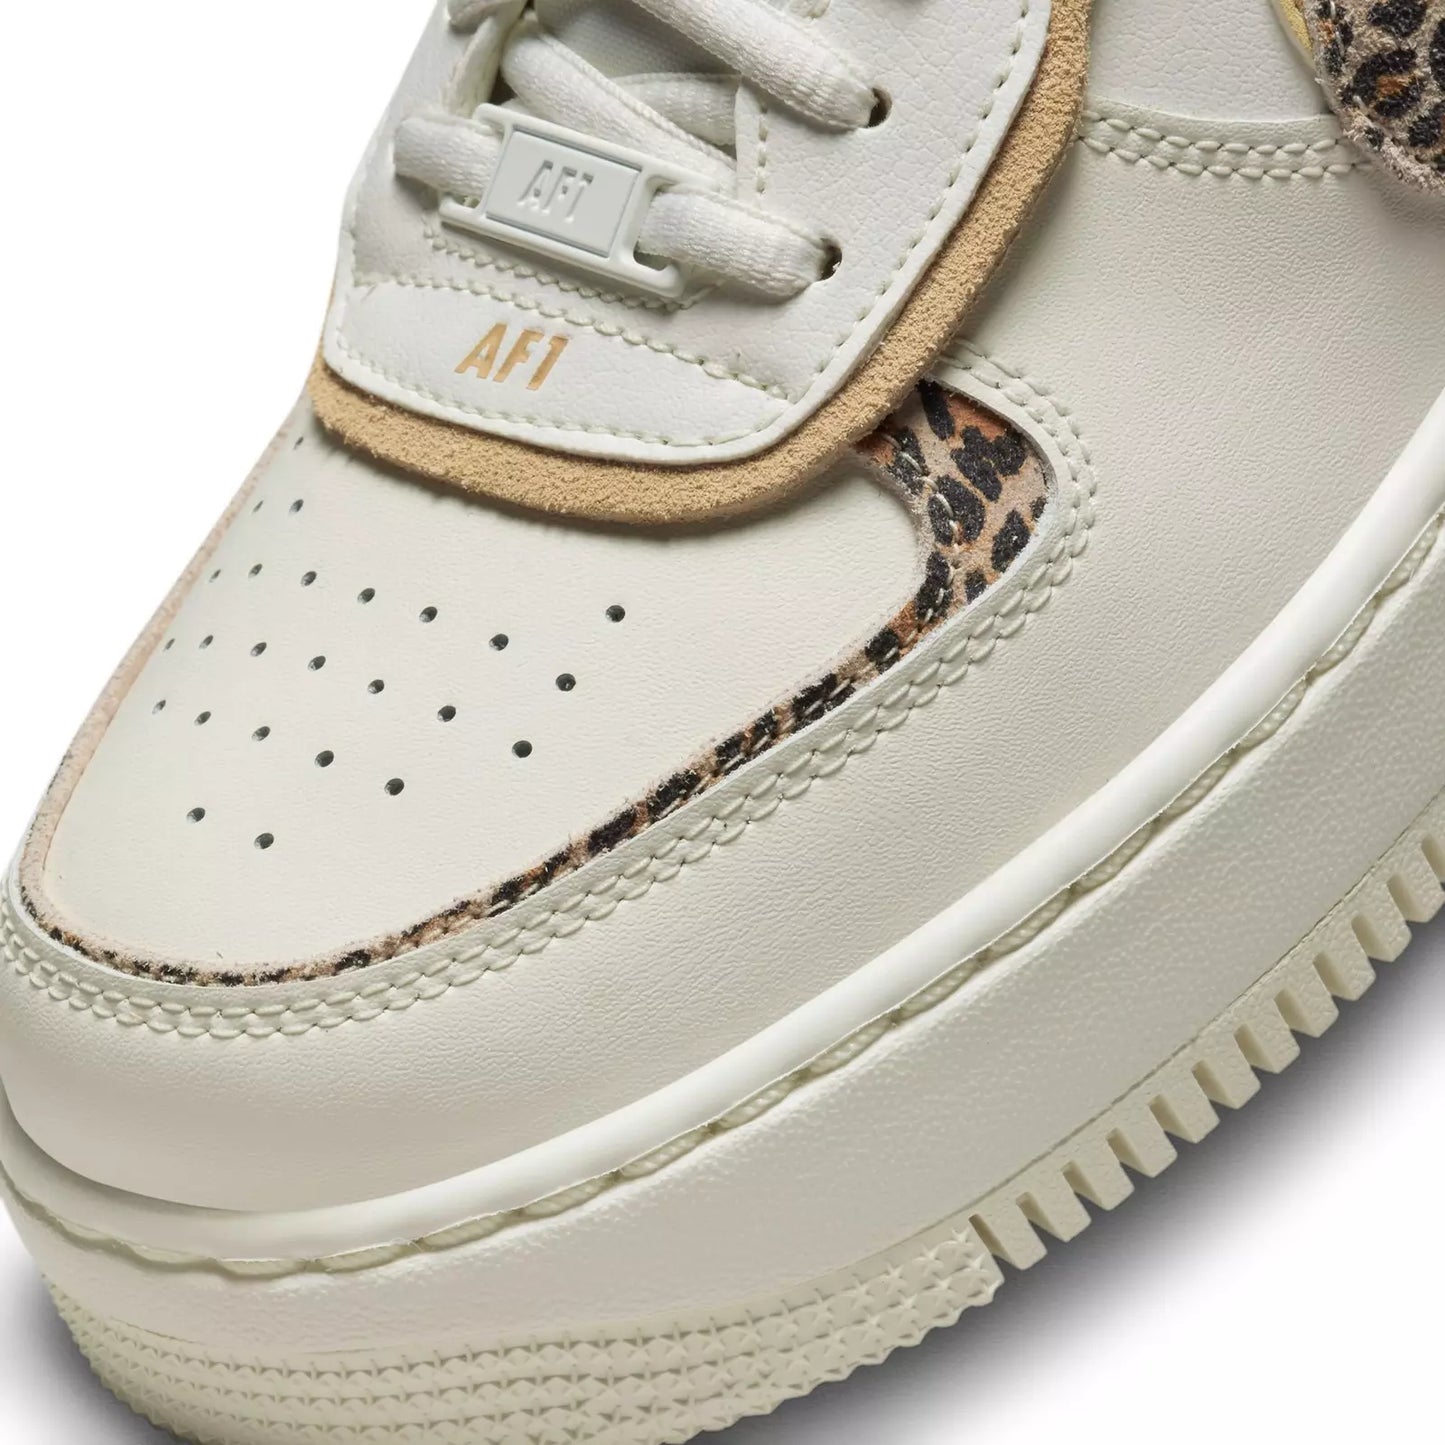 Nike Air Force 1 Shadow White Women's Shoe